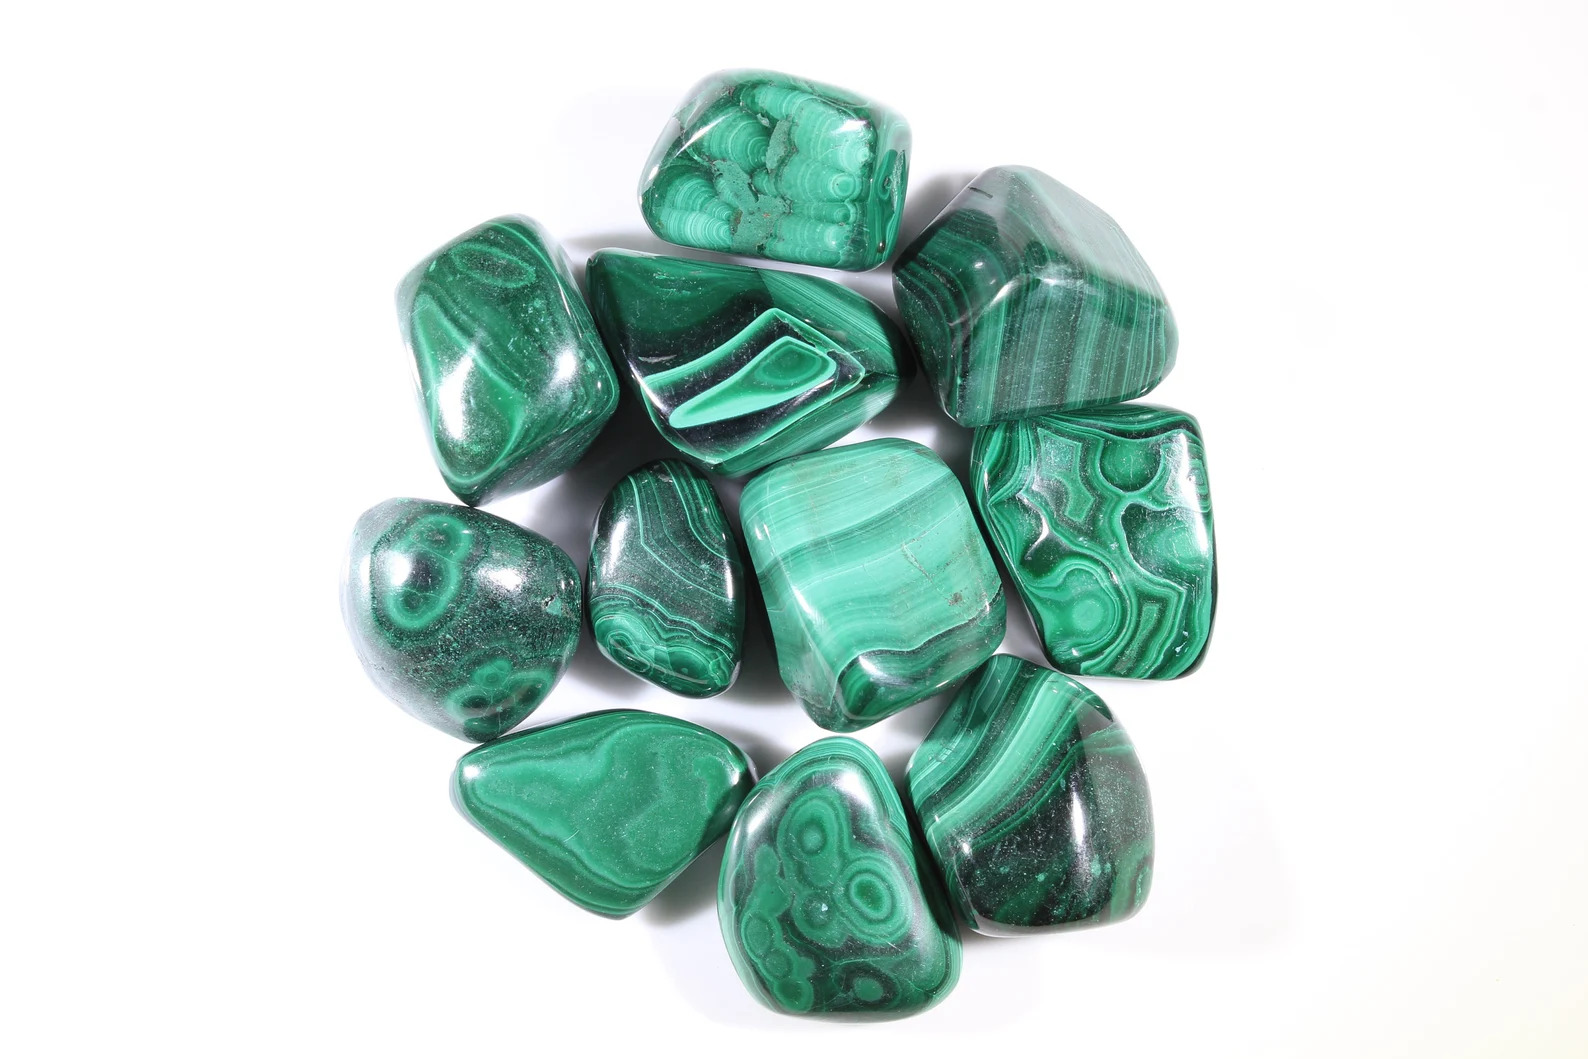 Malachite Tumbled Gemstones from South Africa - Bulk Wholesale Options - 1 LB